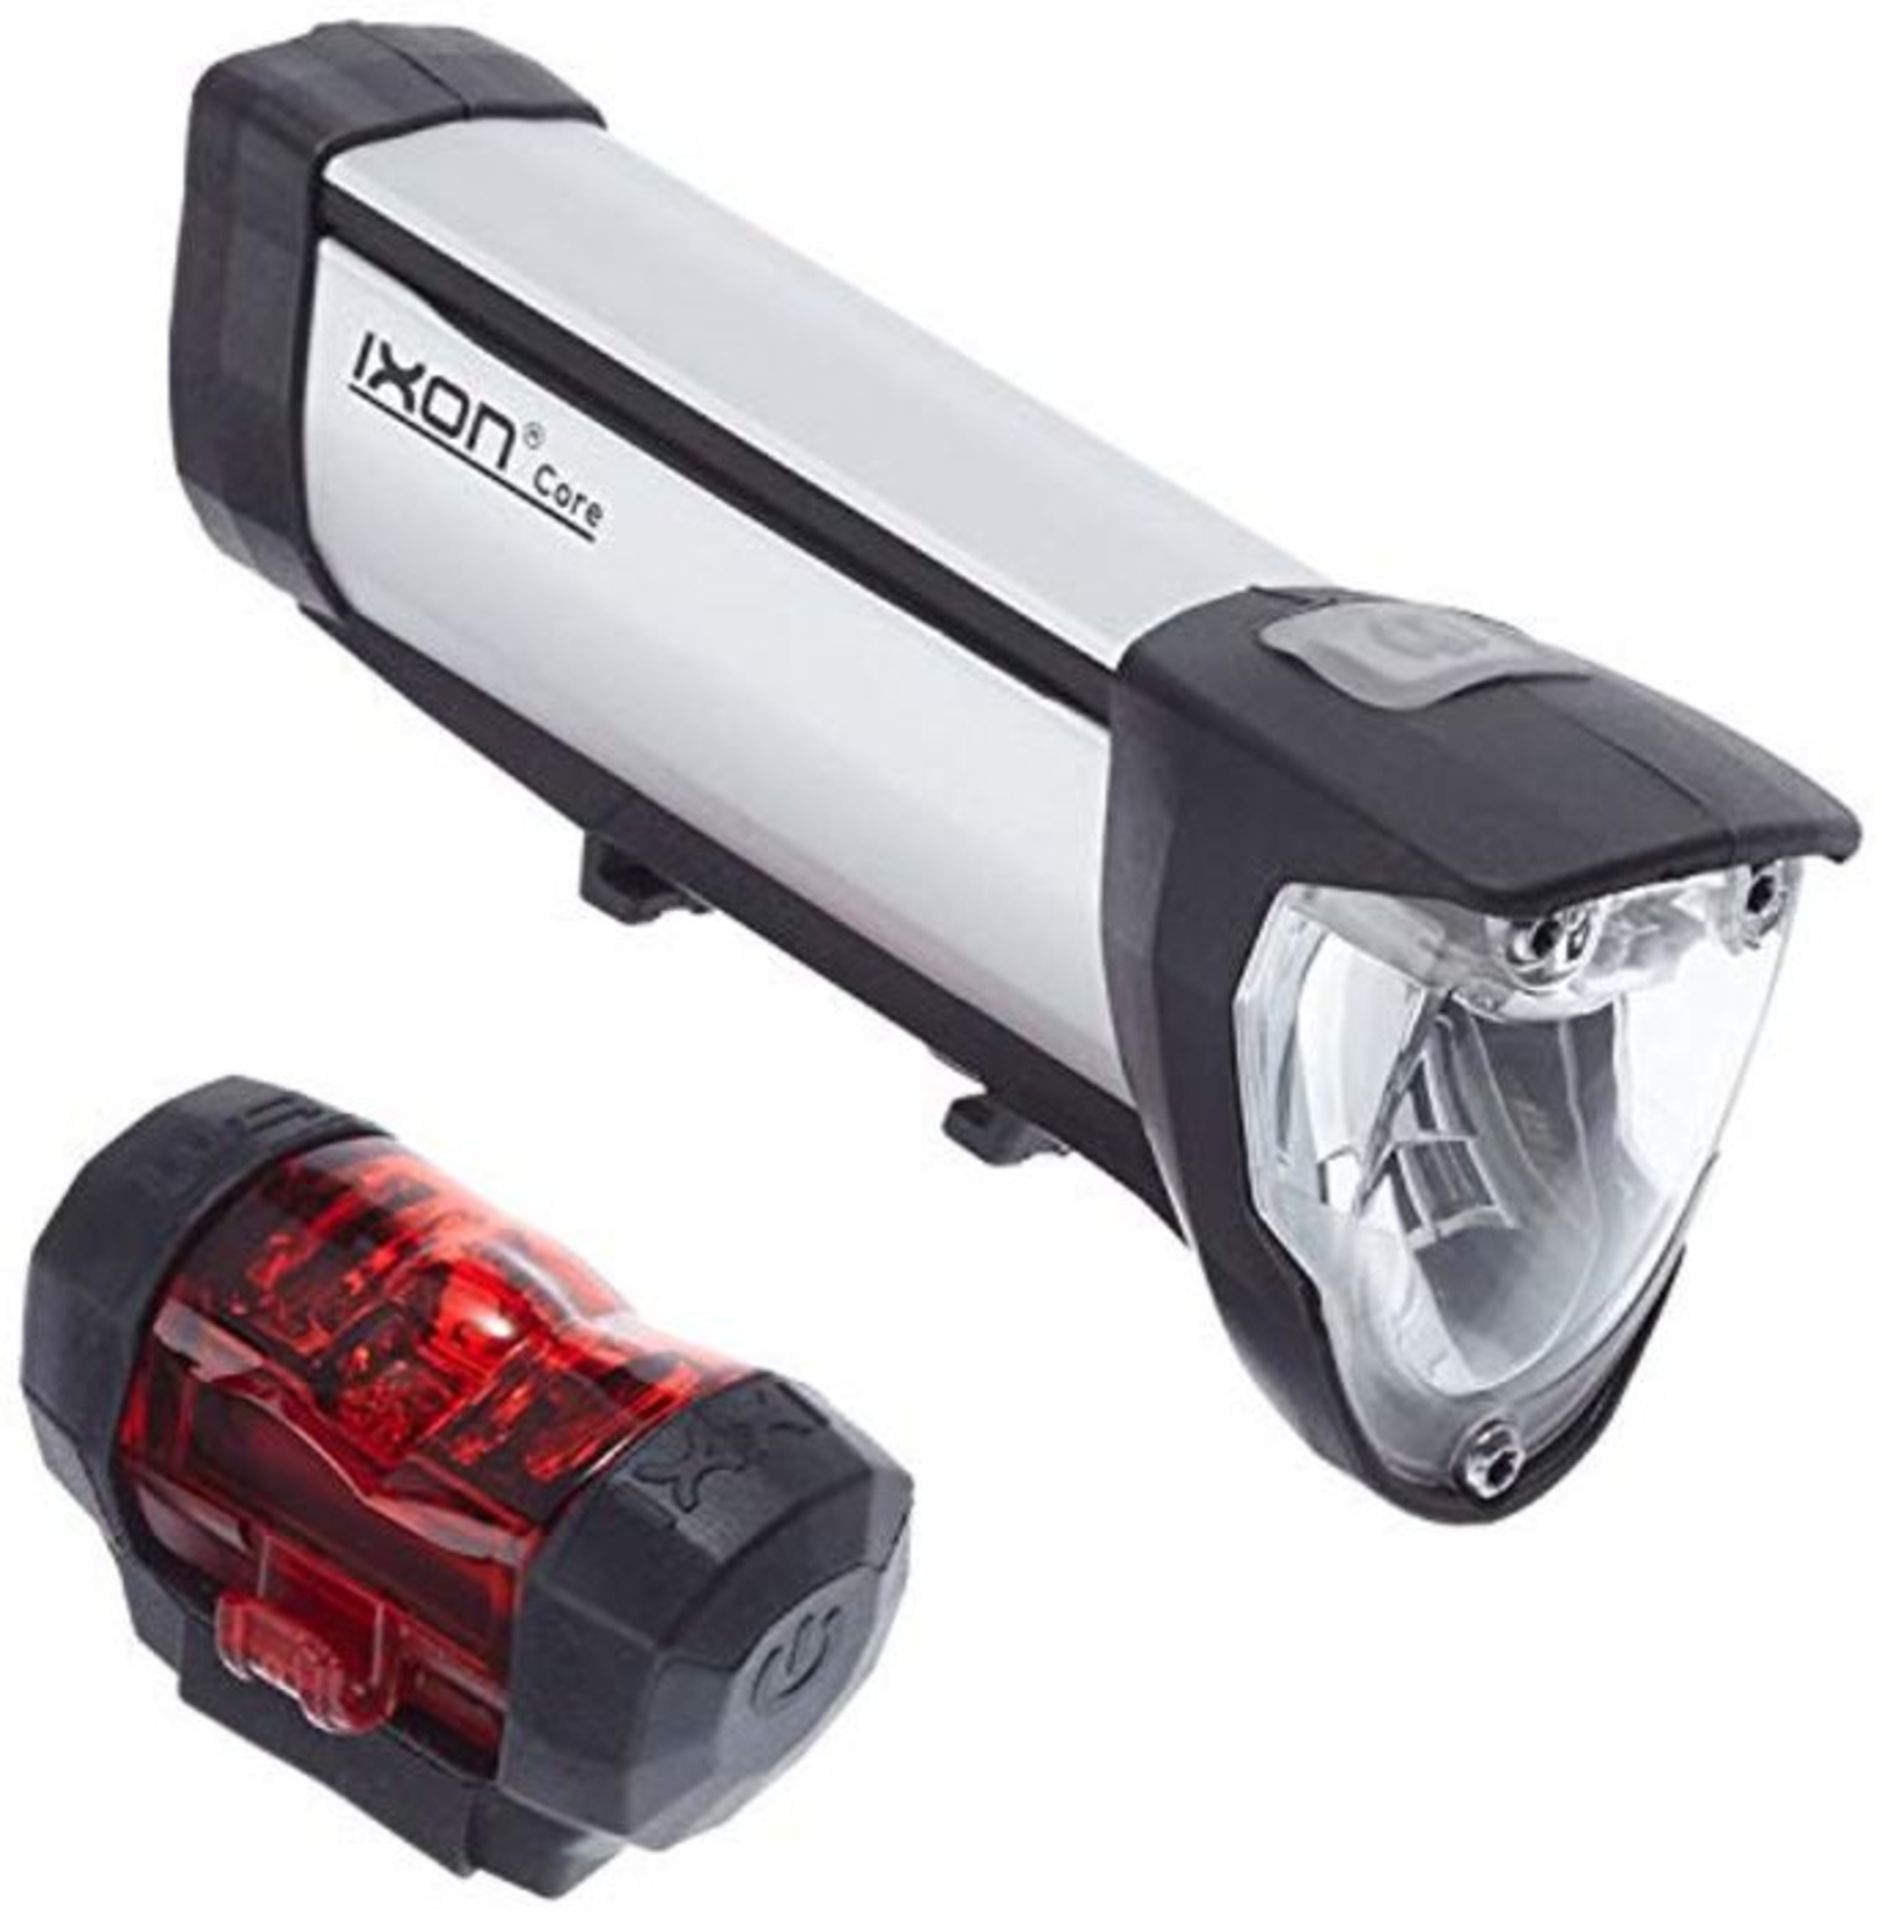 Busch & Müller Battery Operated LED Headlight/Rear Light, Fahrradlicht IXON Core plus